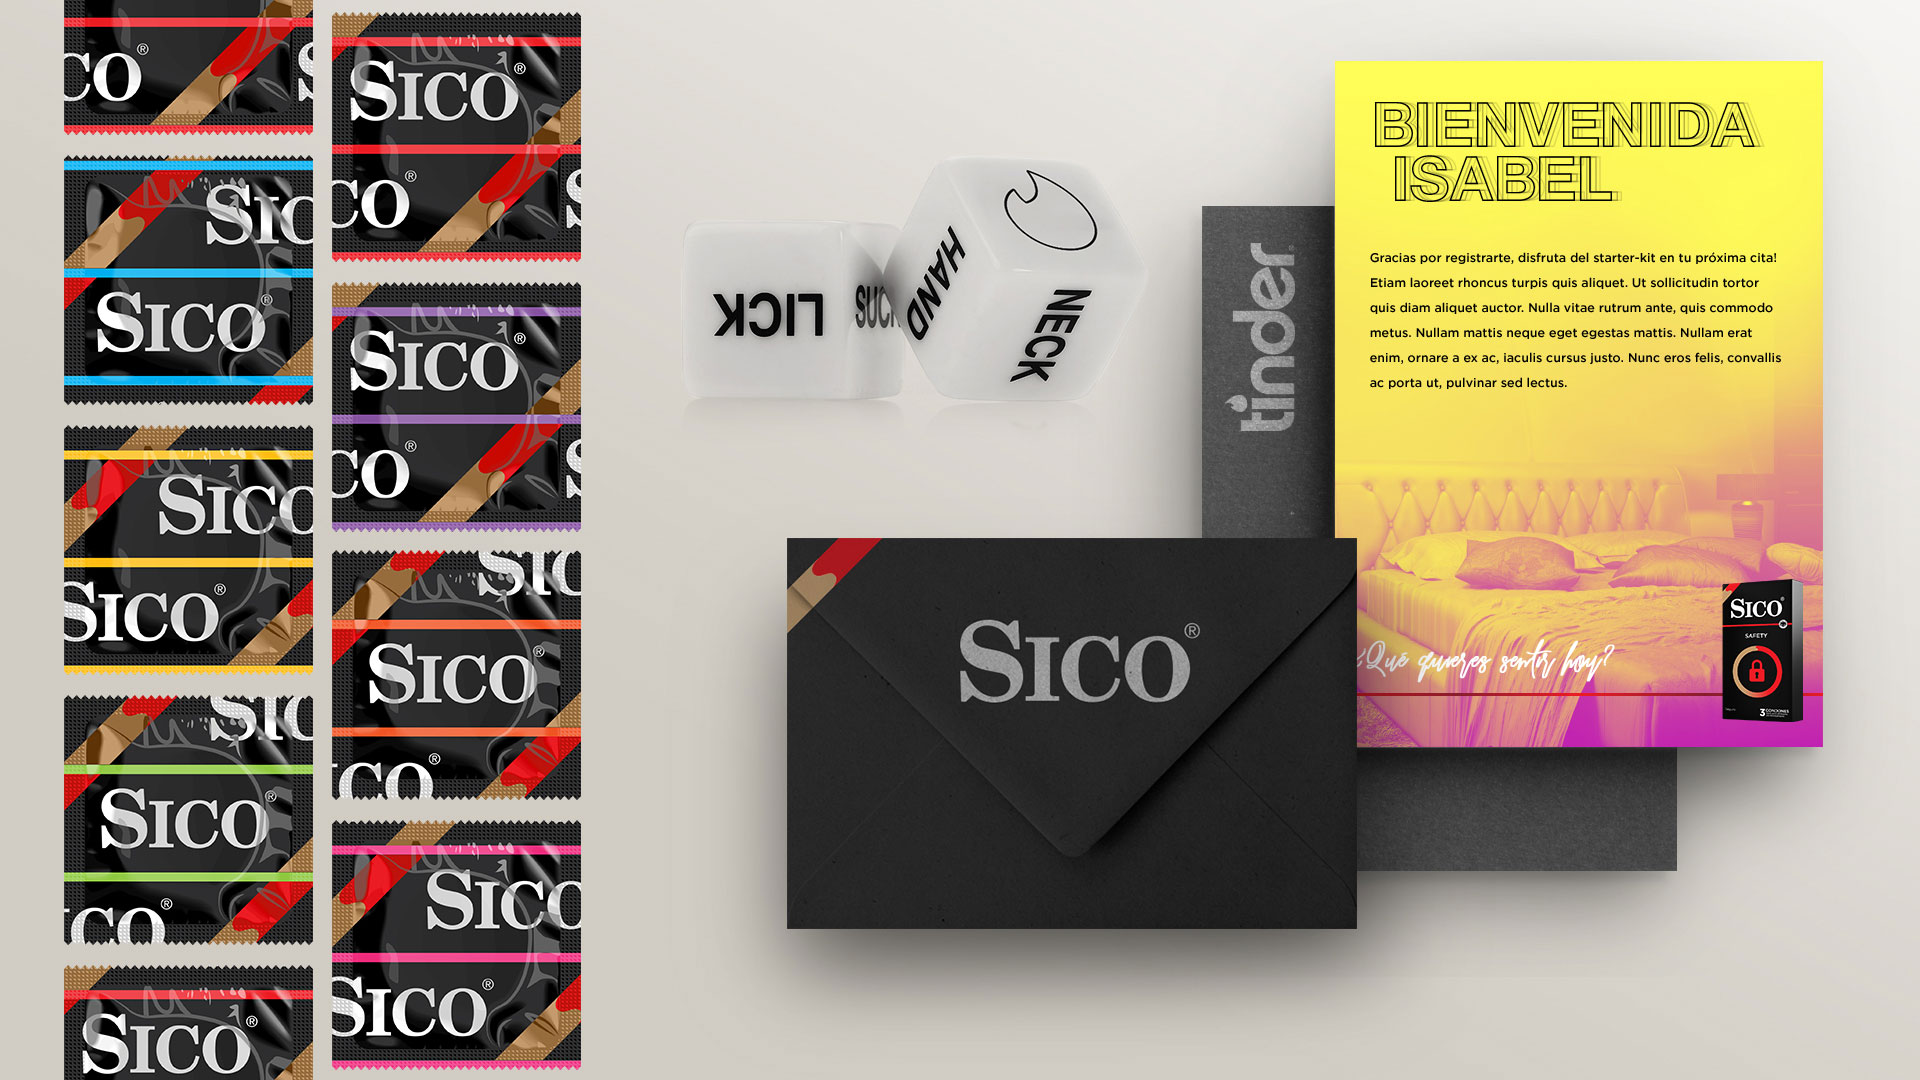 Sico_Advertising